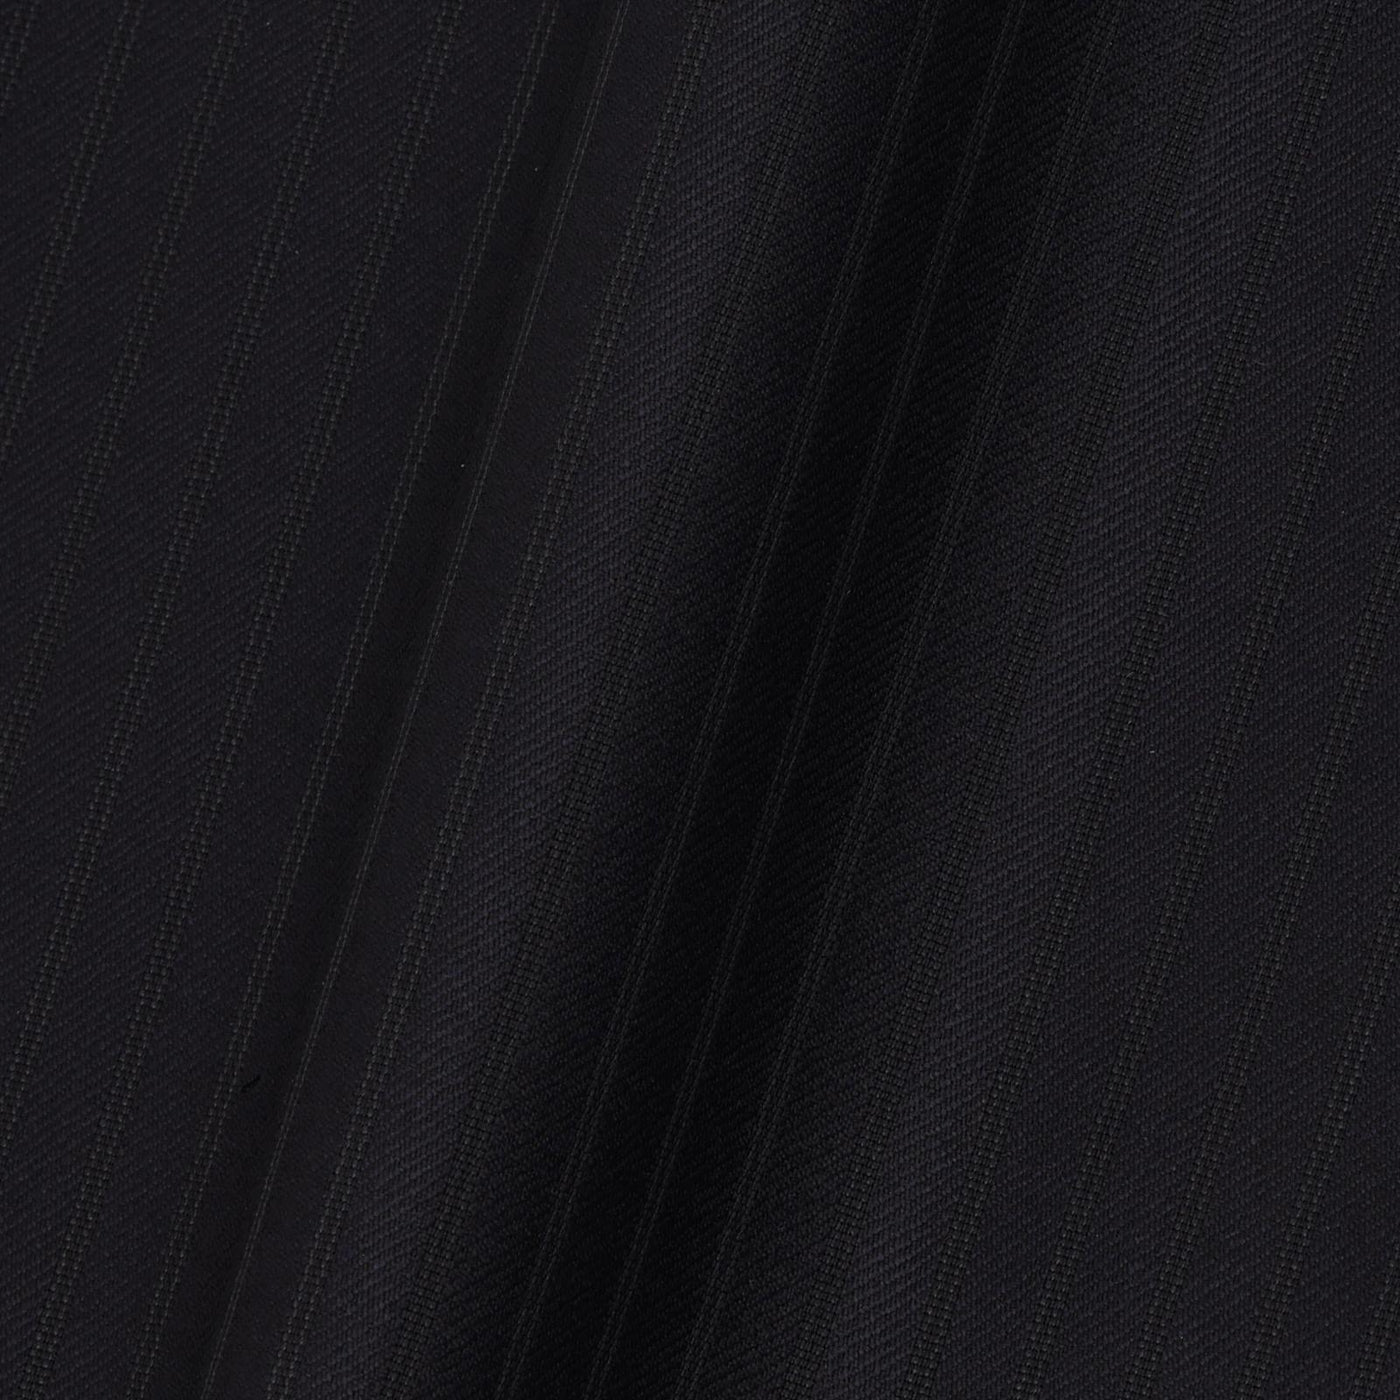 Zegna Winter Fabric #2630/0100